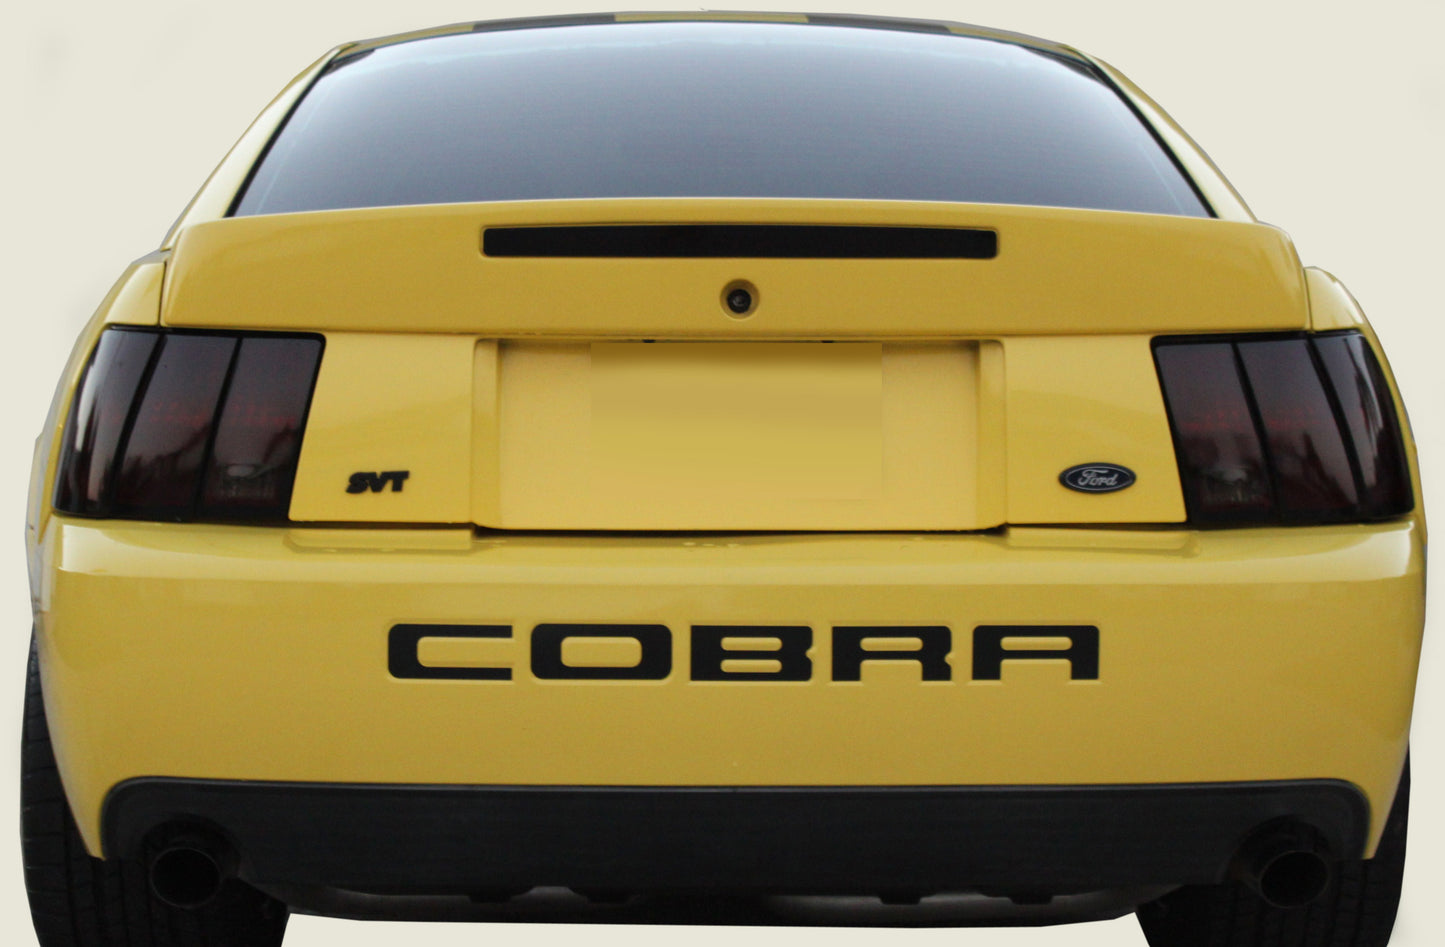 03-04 Ford Mustang Cobra Taillight Tint Vinyl Overlays